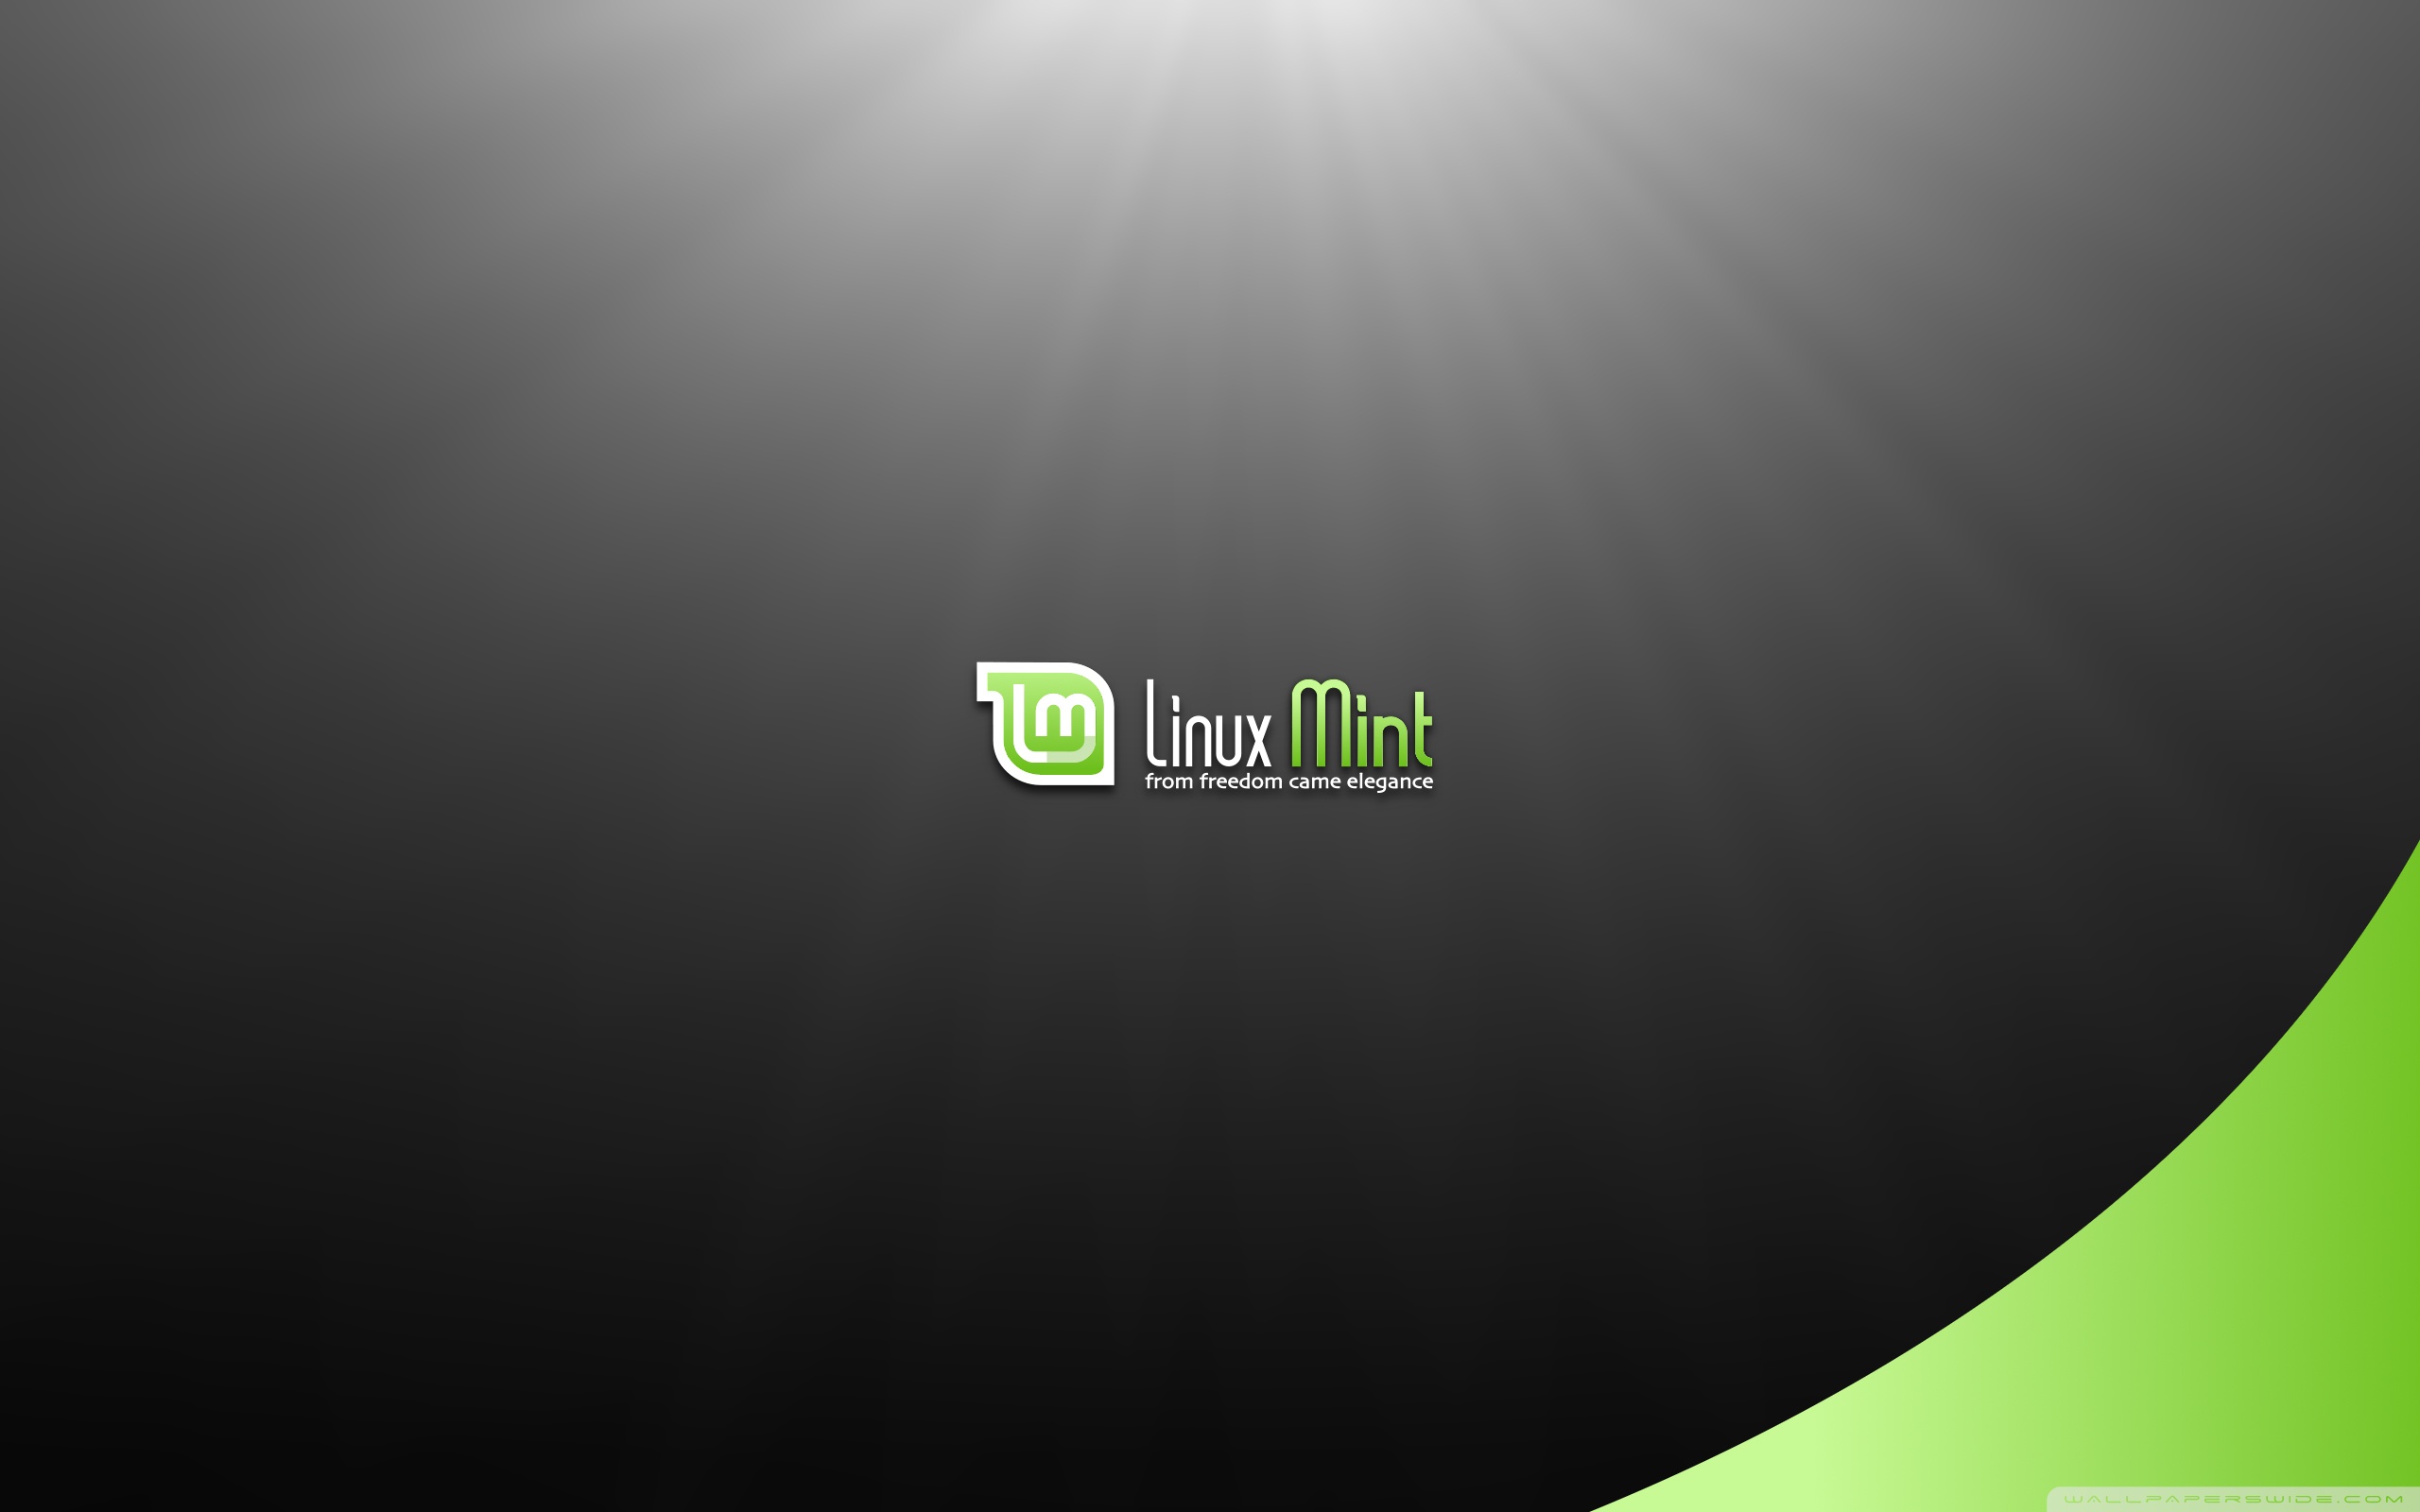 Linux Mint Ultra Hd Desktop Background Wallpaper For 4k Uhd Tv Multi Display Dual Monitor Tablet Smartphone